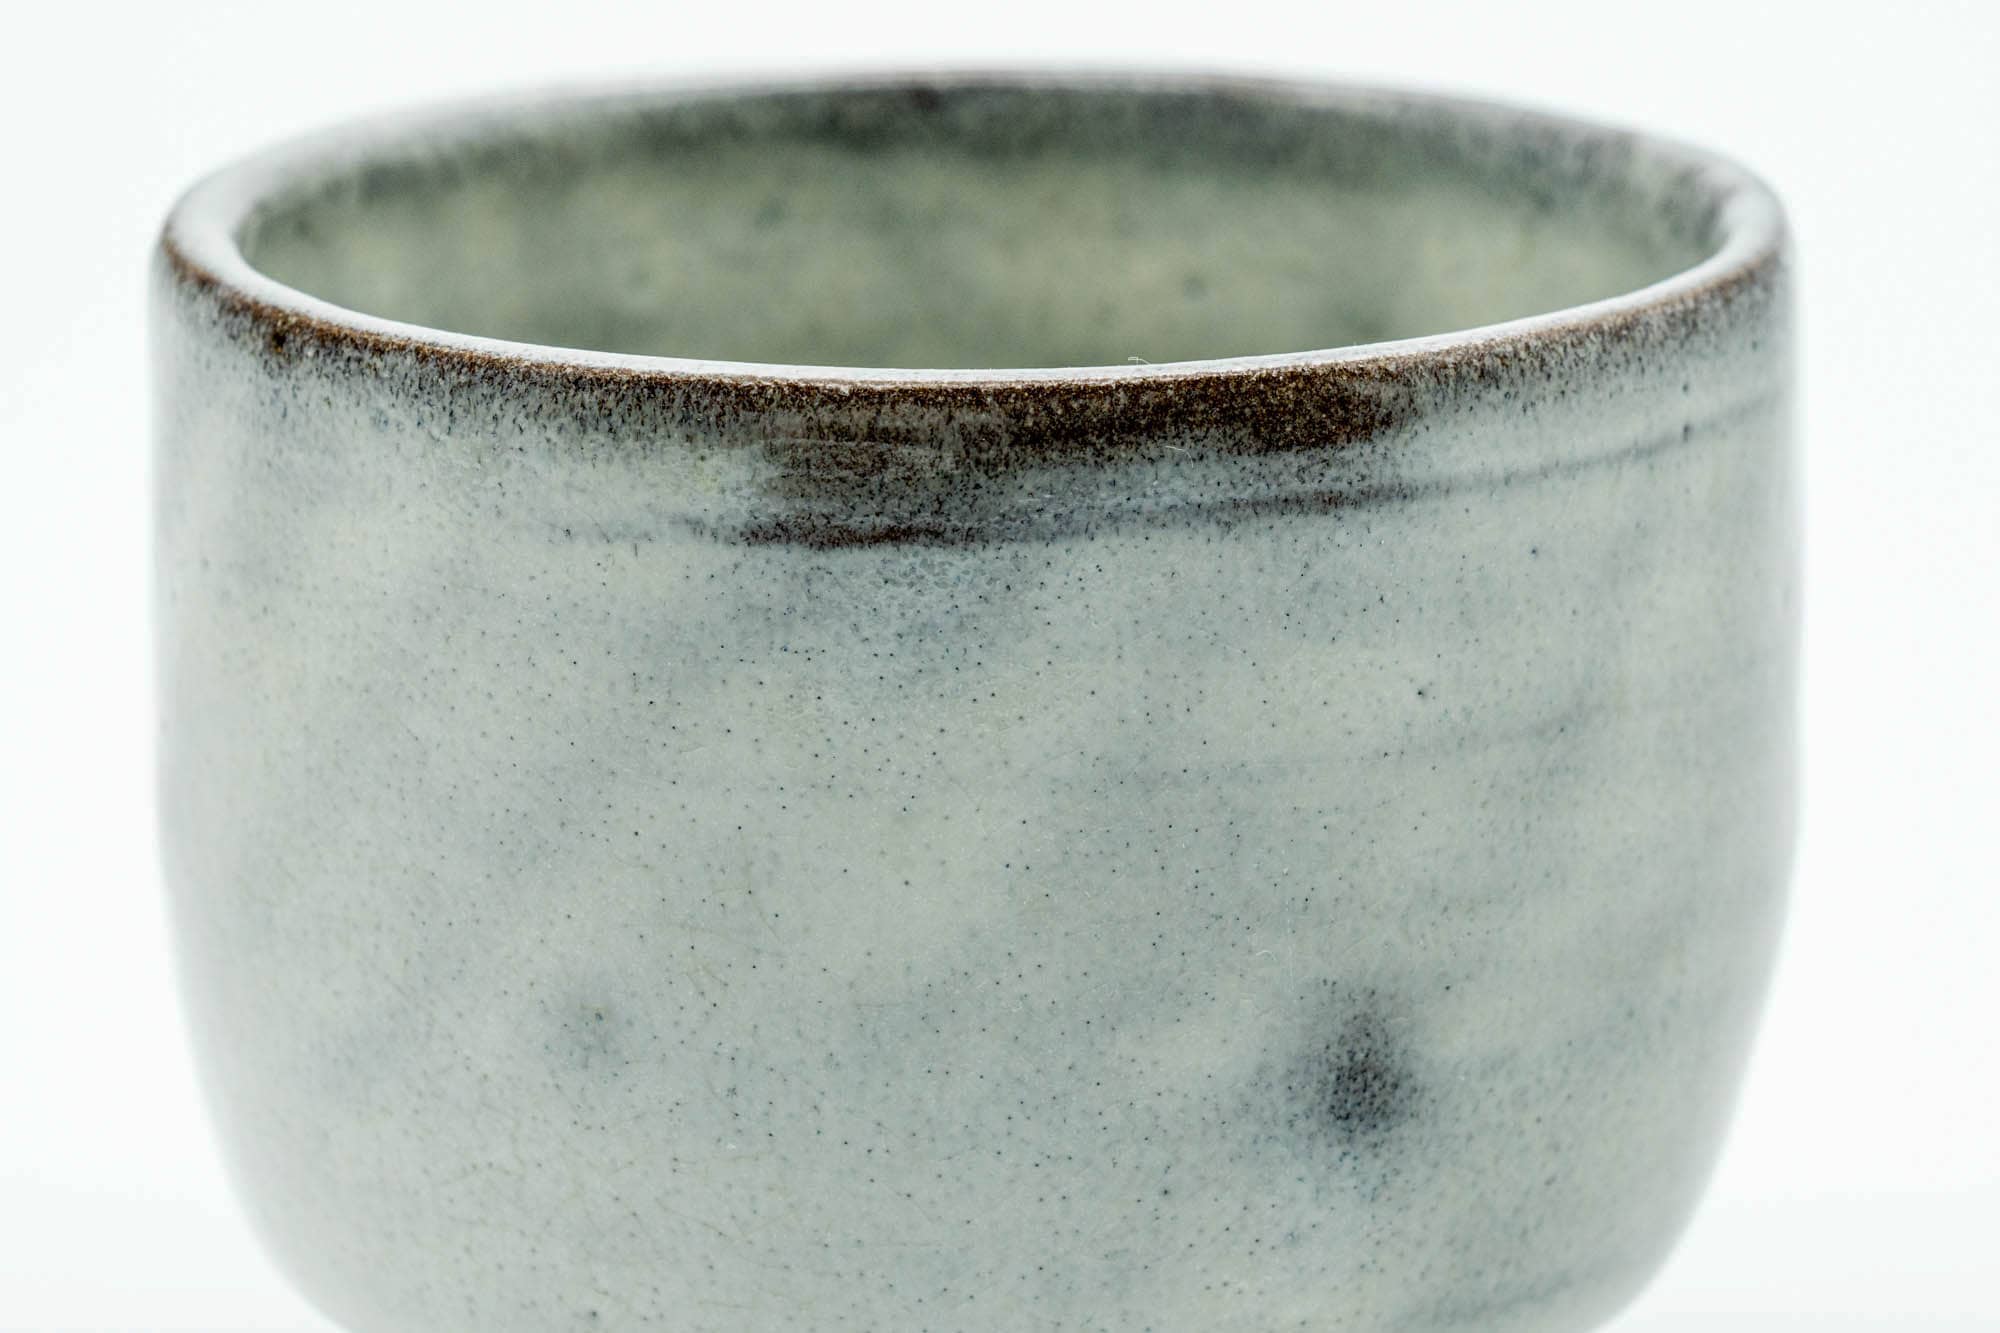 Japanese Teacup - Milky White Glazed Yunomi - 150ml